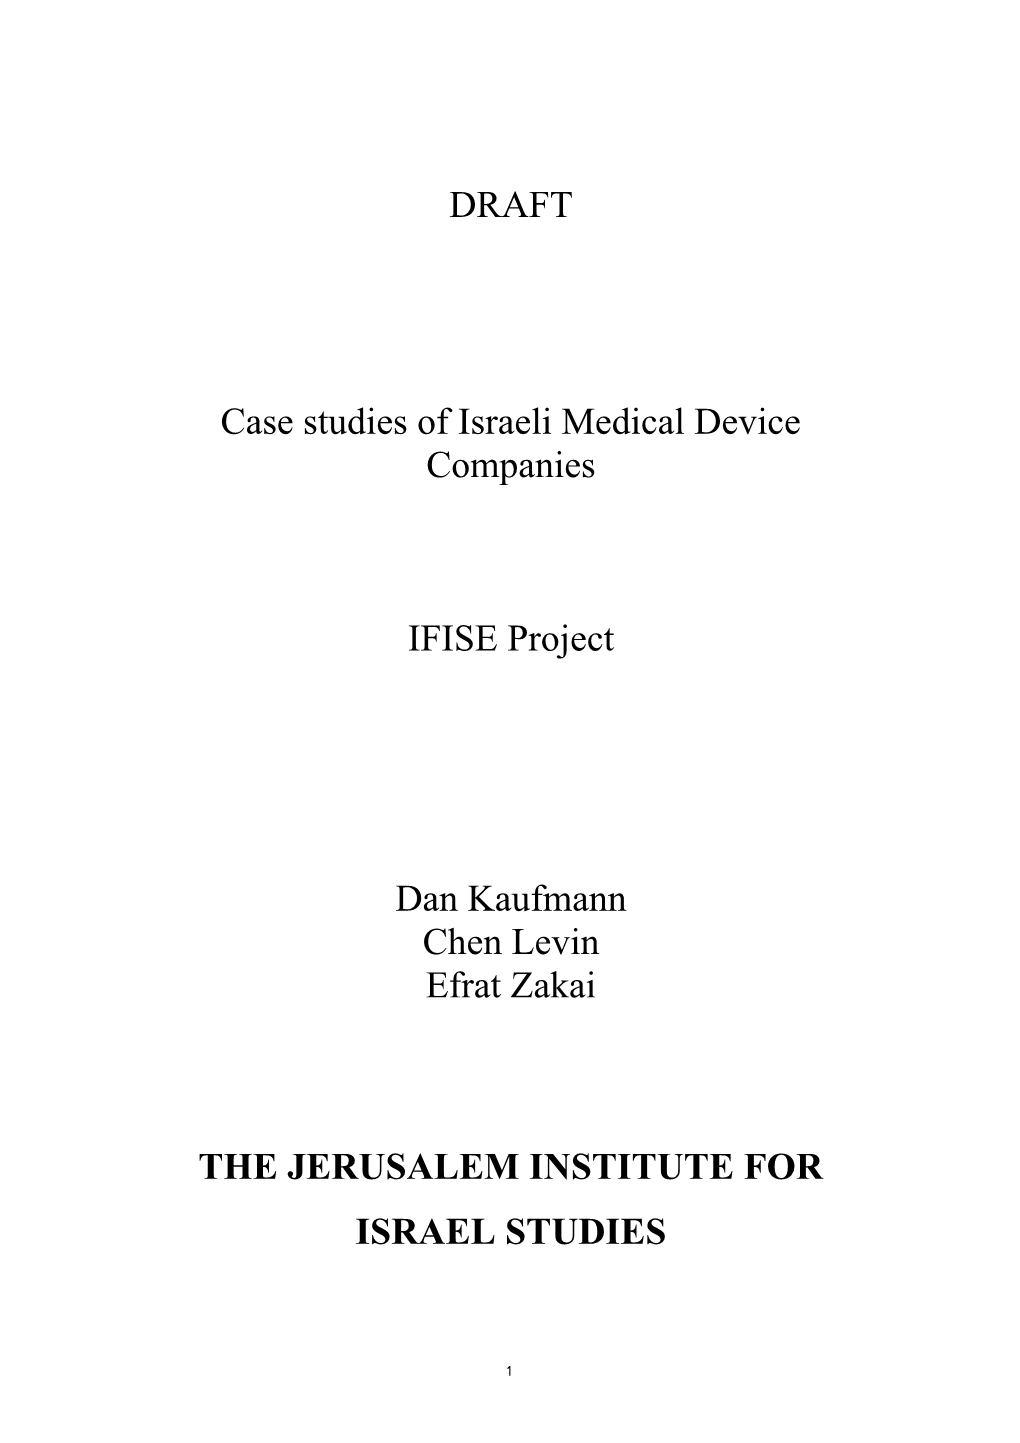 Case Studies of Israeli Medical Device Companies